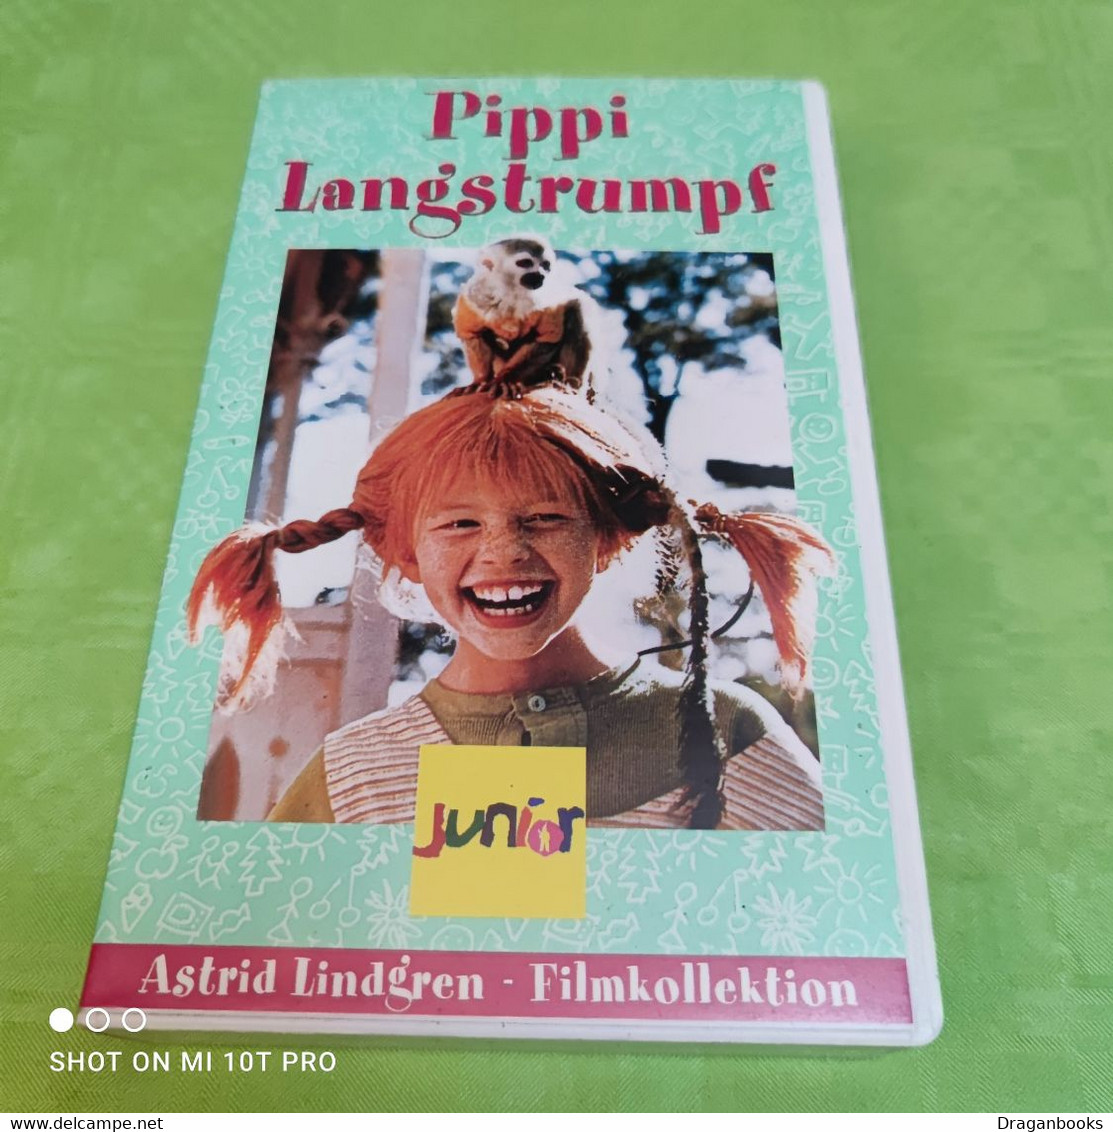 Pippi Langstrumpf - Children & Family